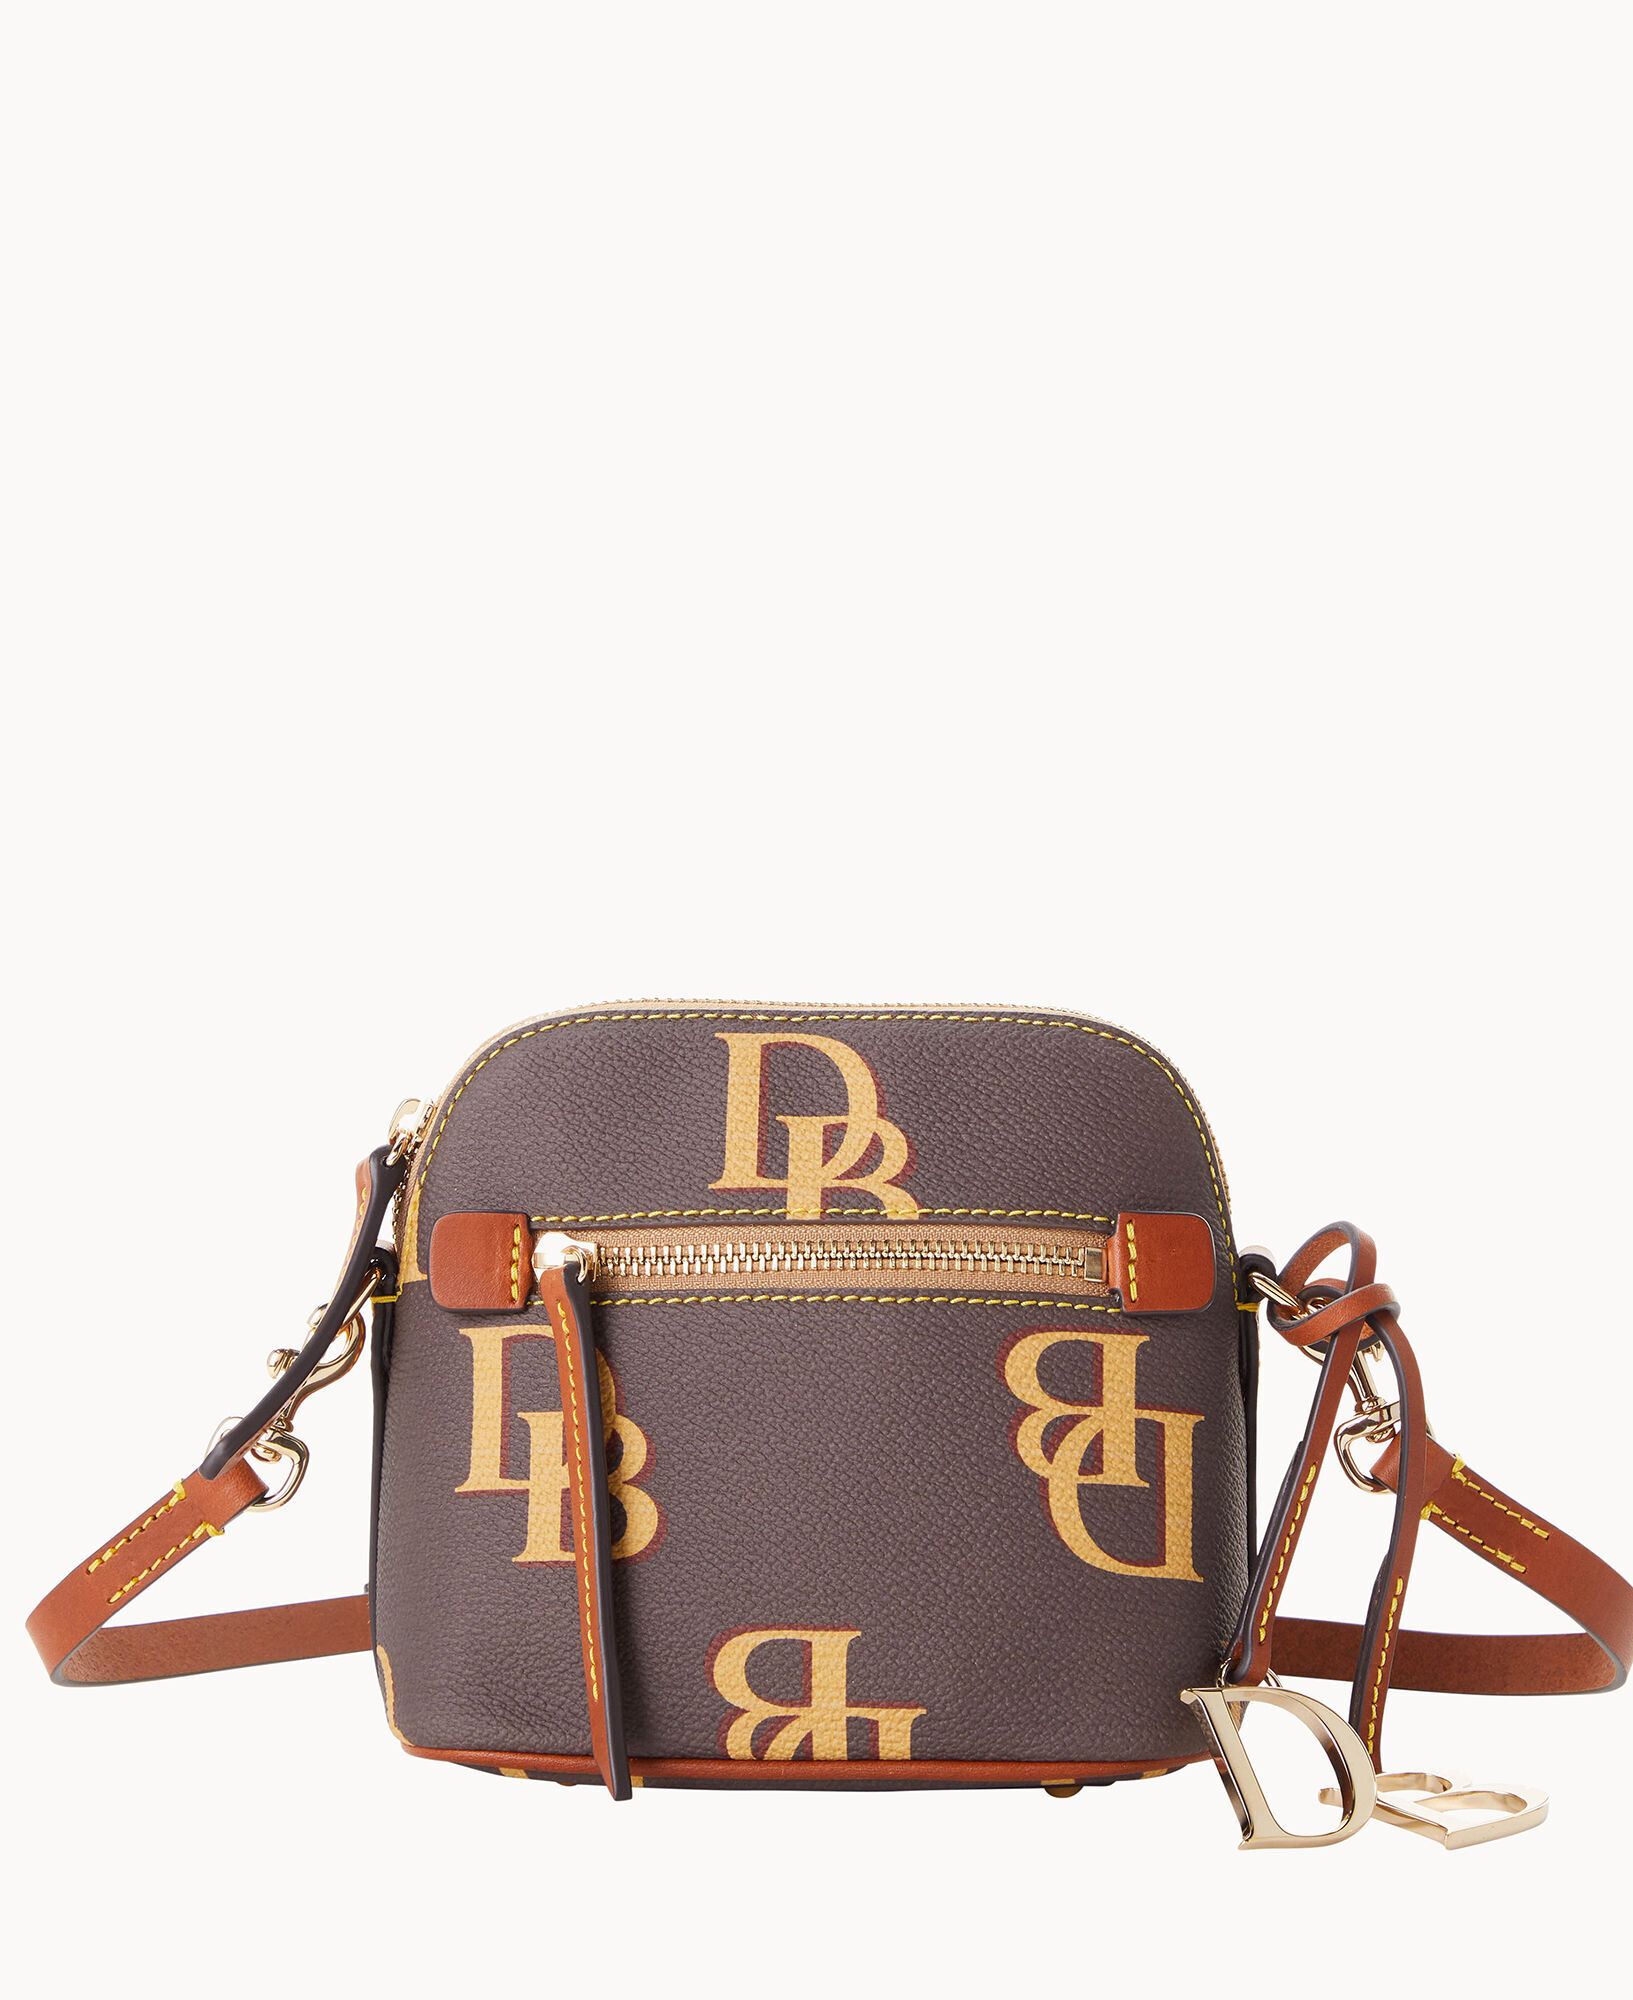 DOONEY & BOURKE black fabric leather monogram small shoulder bag